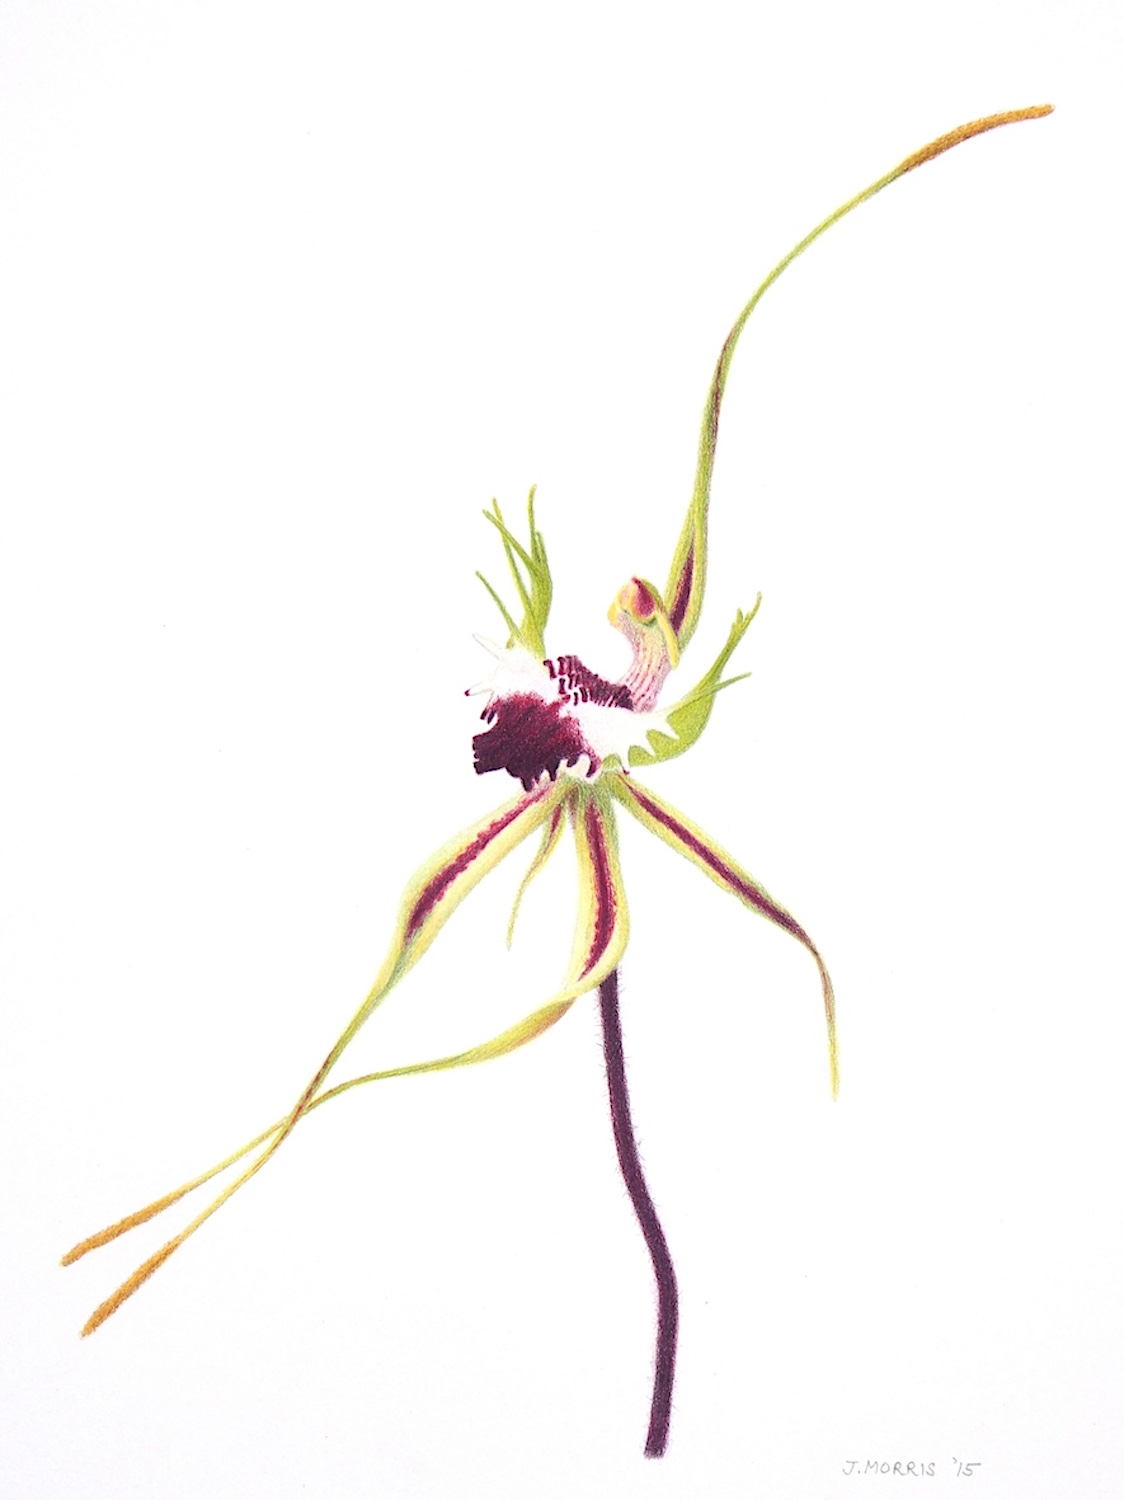 King Spider Orchid, Arachnorchis tentaculata (2015).